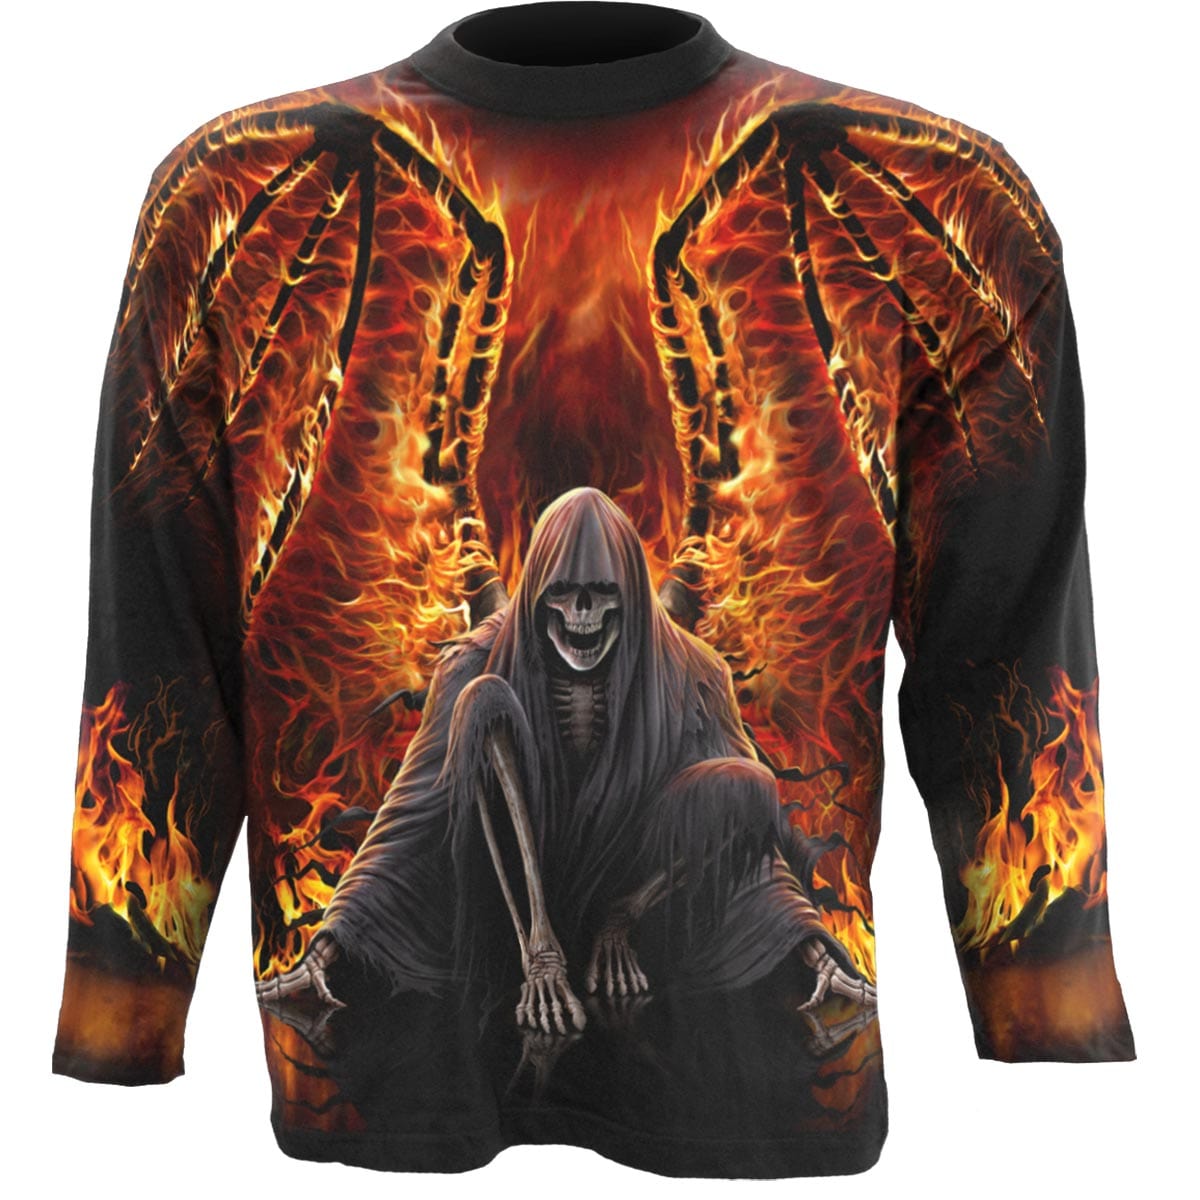 FLAMING DEATH - Allover Longsleeve T-Shirt Black - Spiral USA